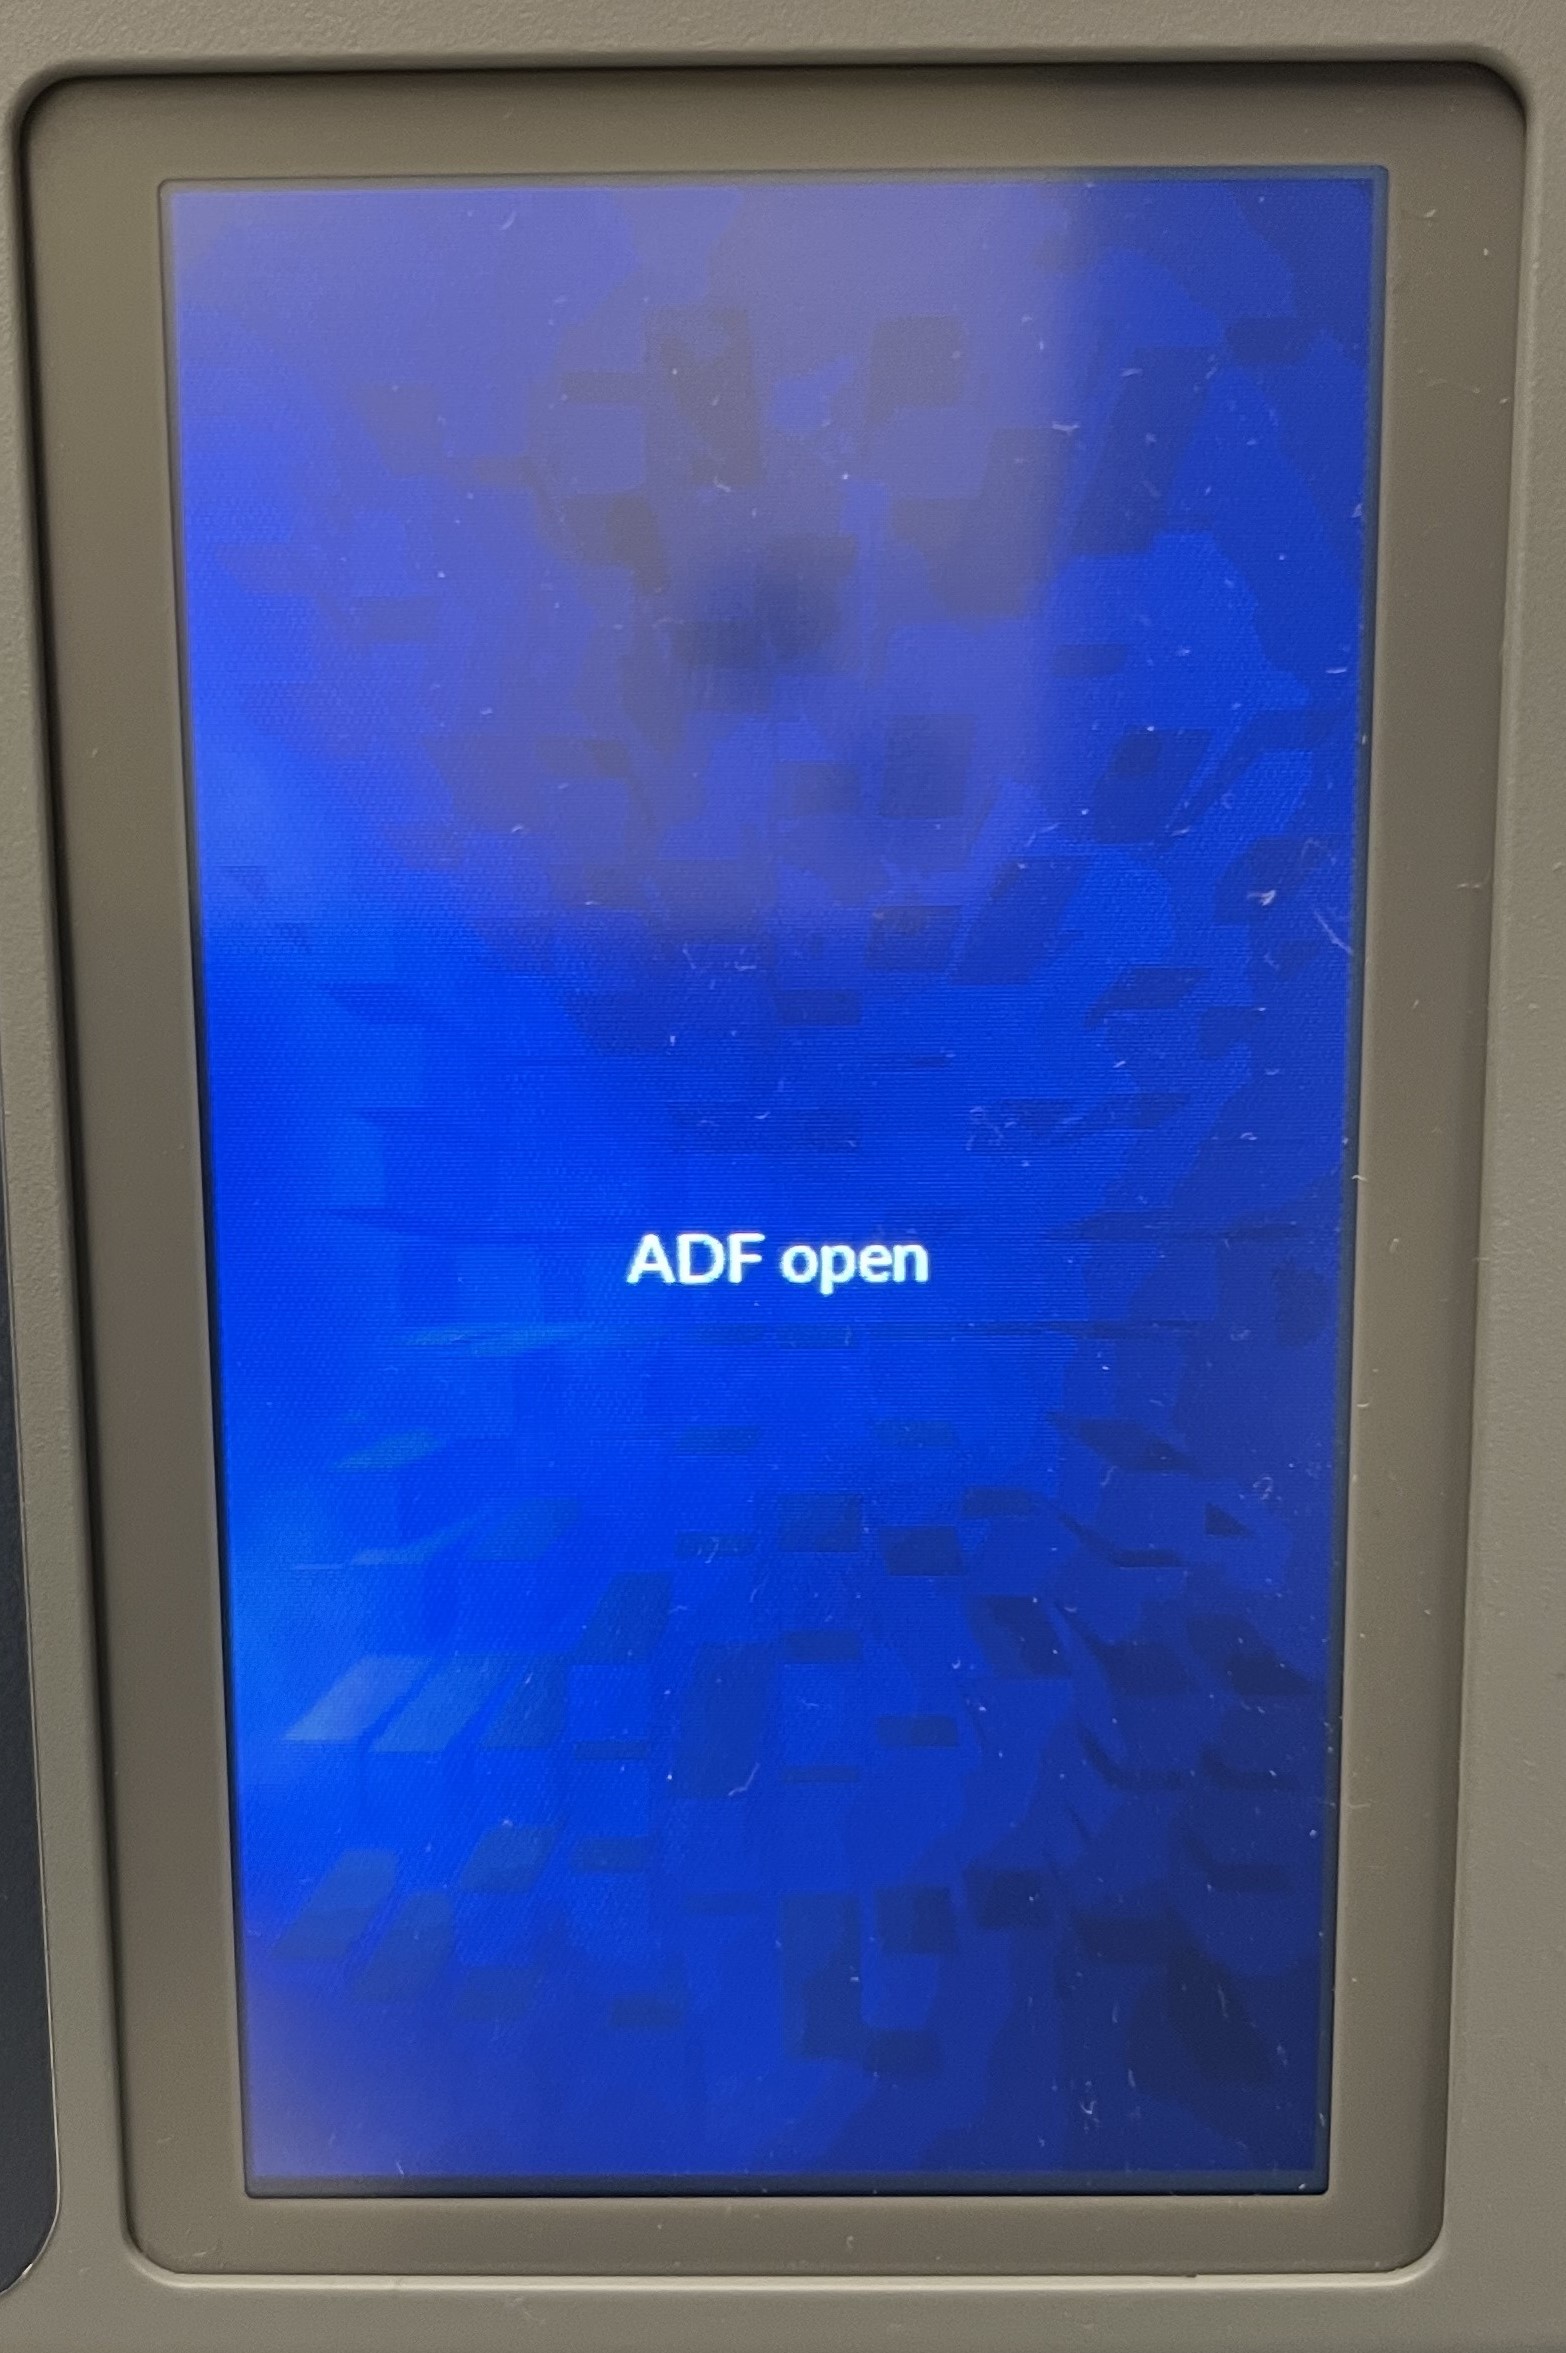 scanner - adf open - screen when opened.jpg